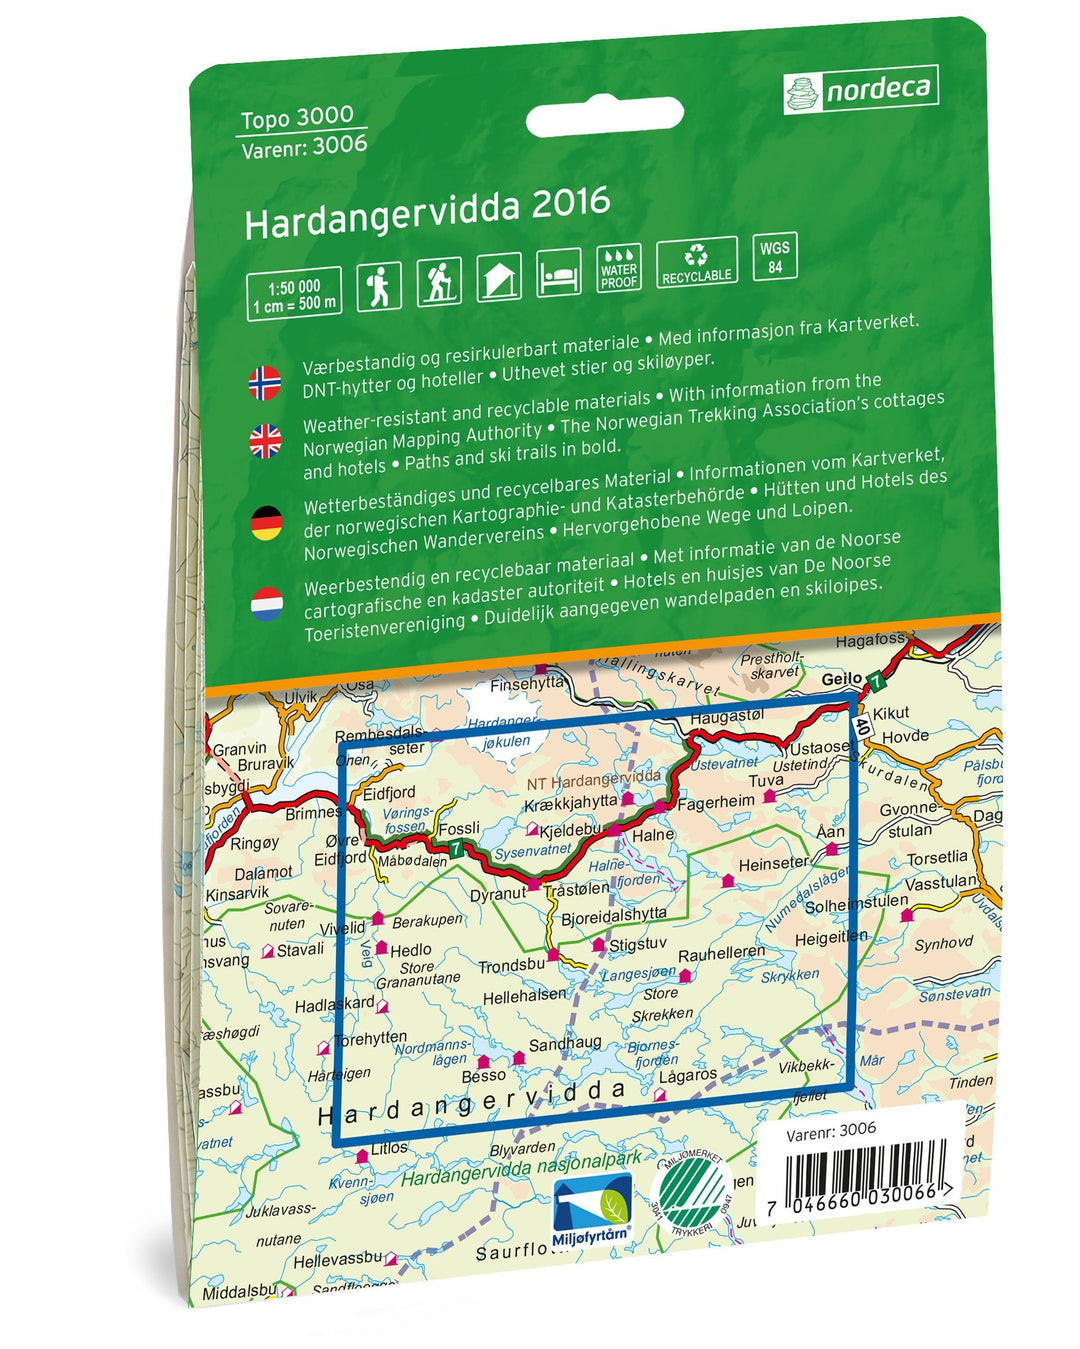 Carte de randonnée n° 3006 - Hardangervidda (Norvège) | Nordeca - série 3000 carte pliée Nordeca 